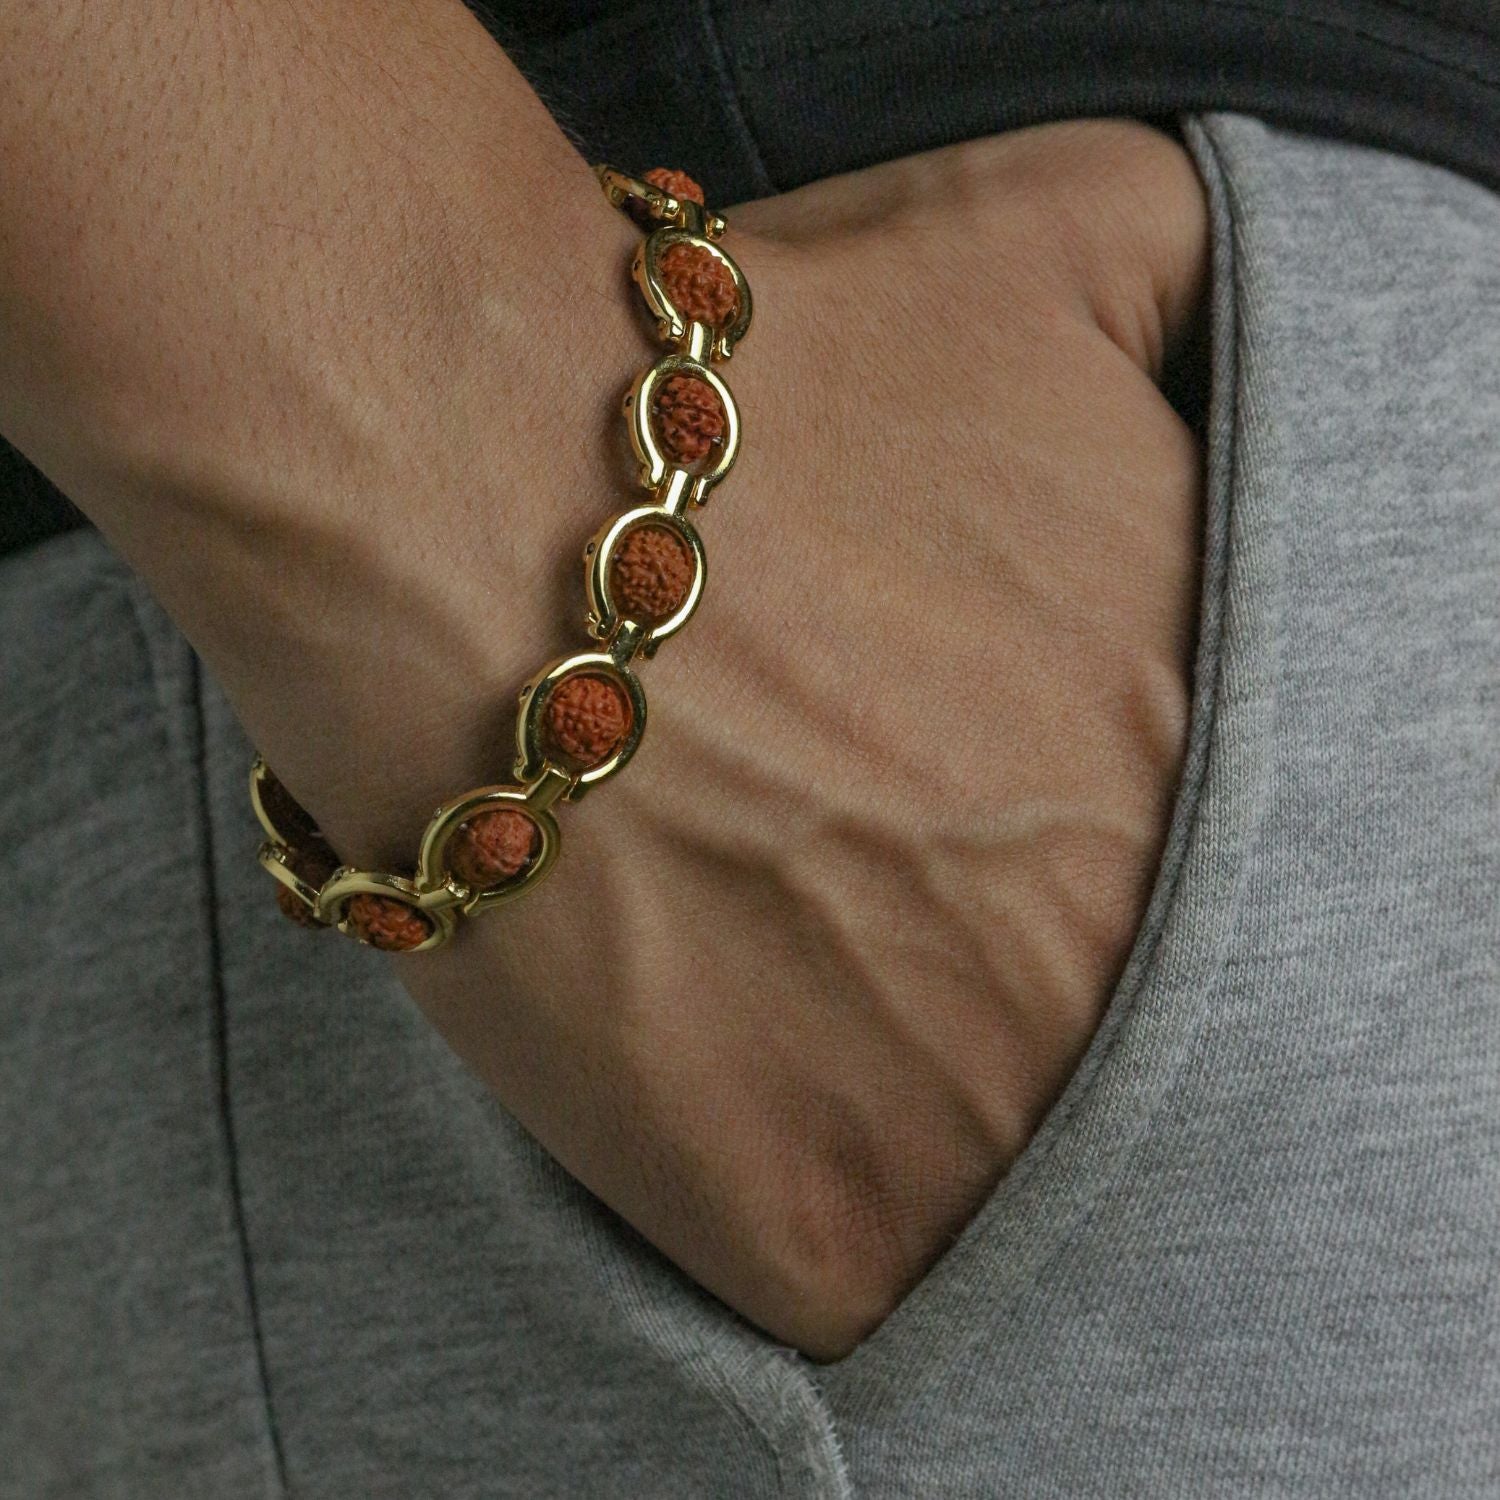 Rudraksha Rudraksh Bracelet With Gold Plated Cap For Stess Free Life  Energized | eBay